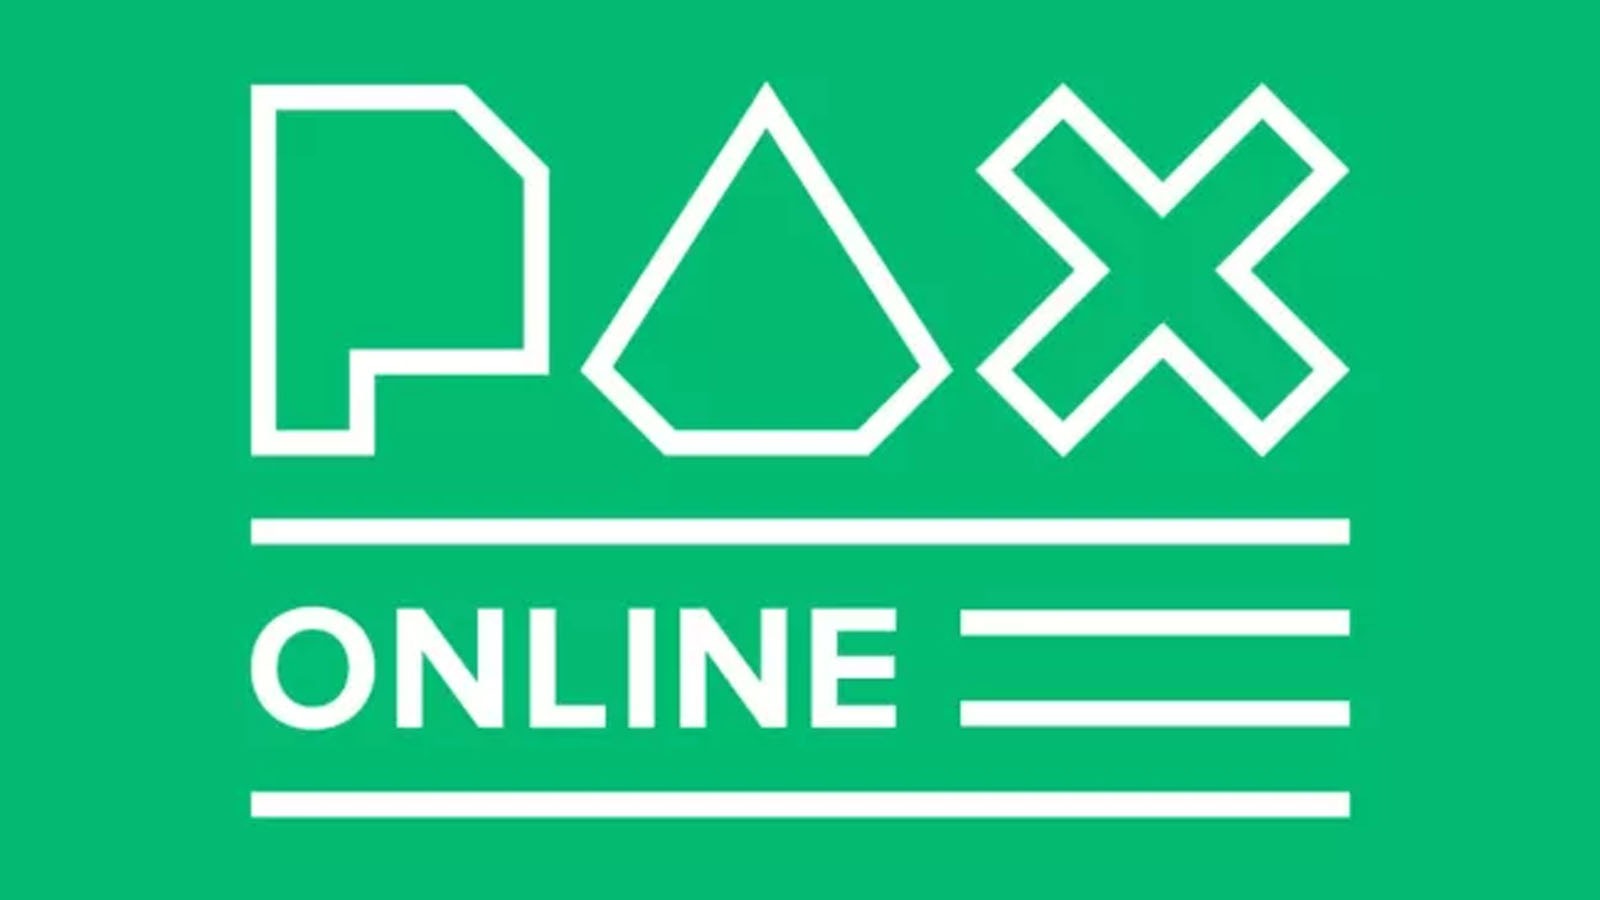 PAX Online